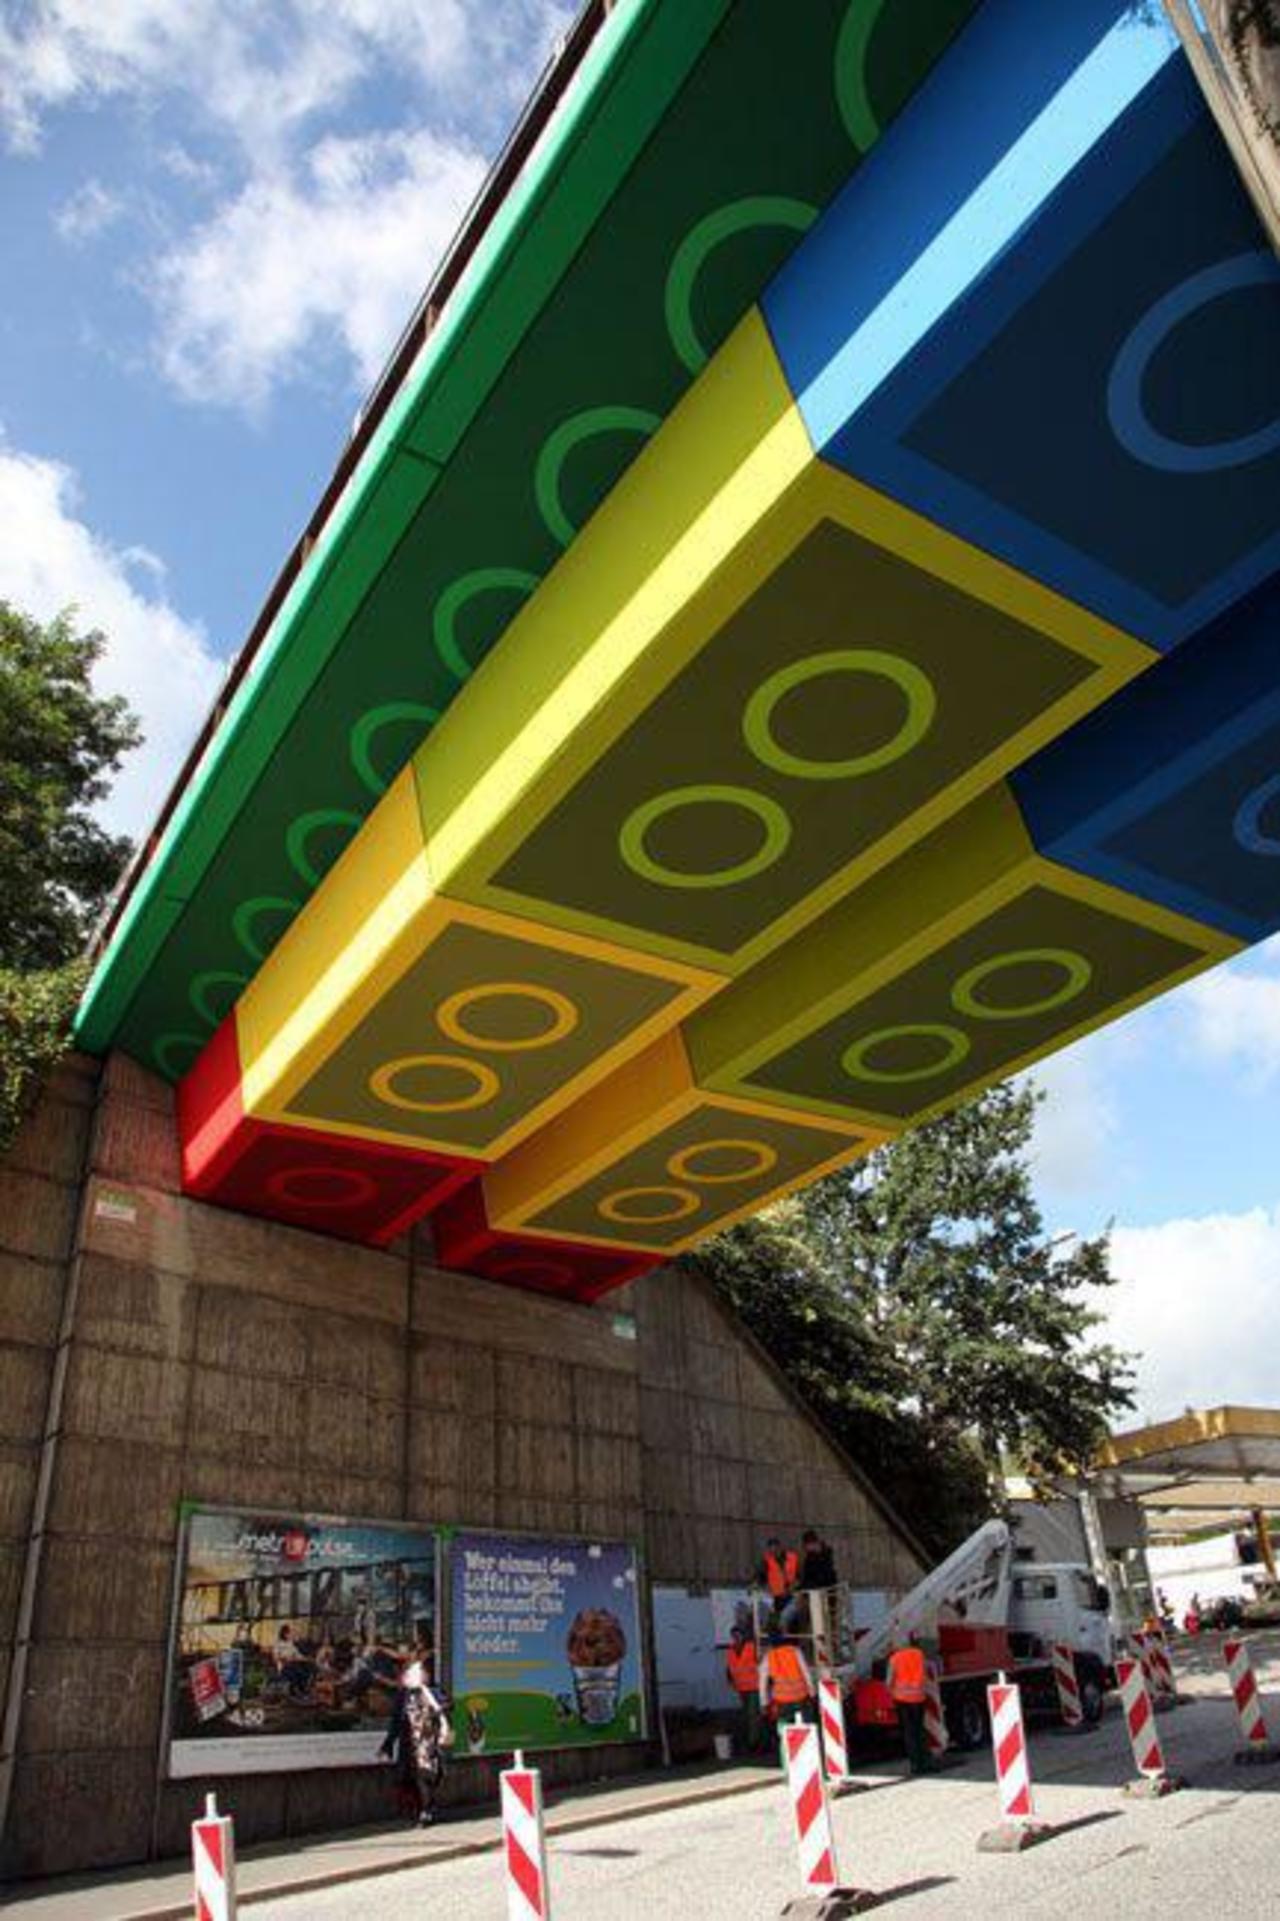 RT @AuKeats: #switch #LEGO into #streetart #germany #bedifferent #graffiti #arte #art http://t.co/858gmsknJq